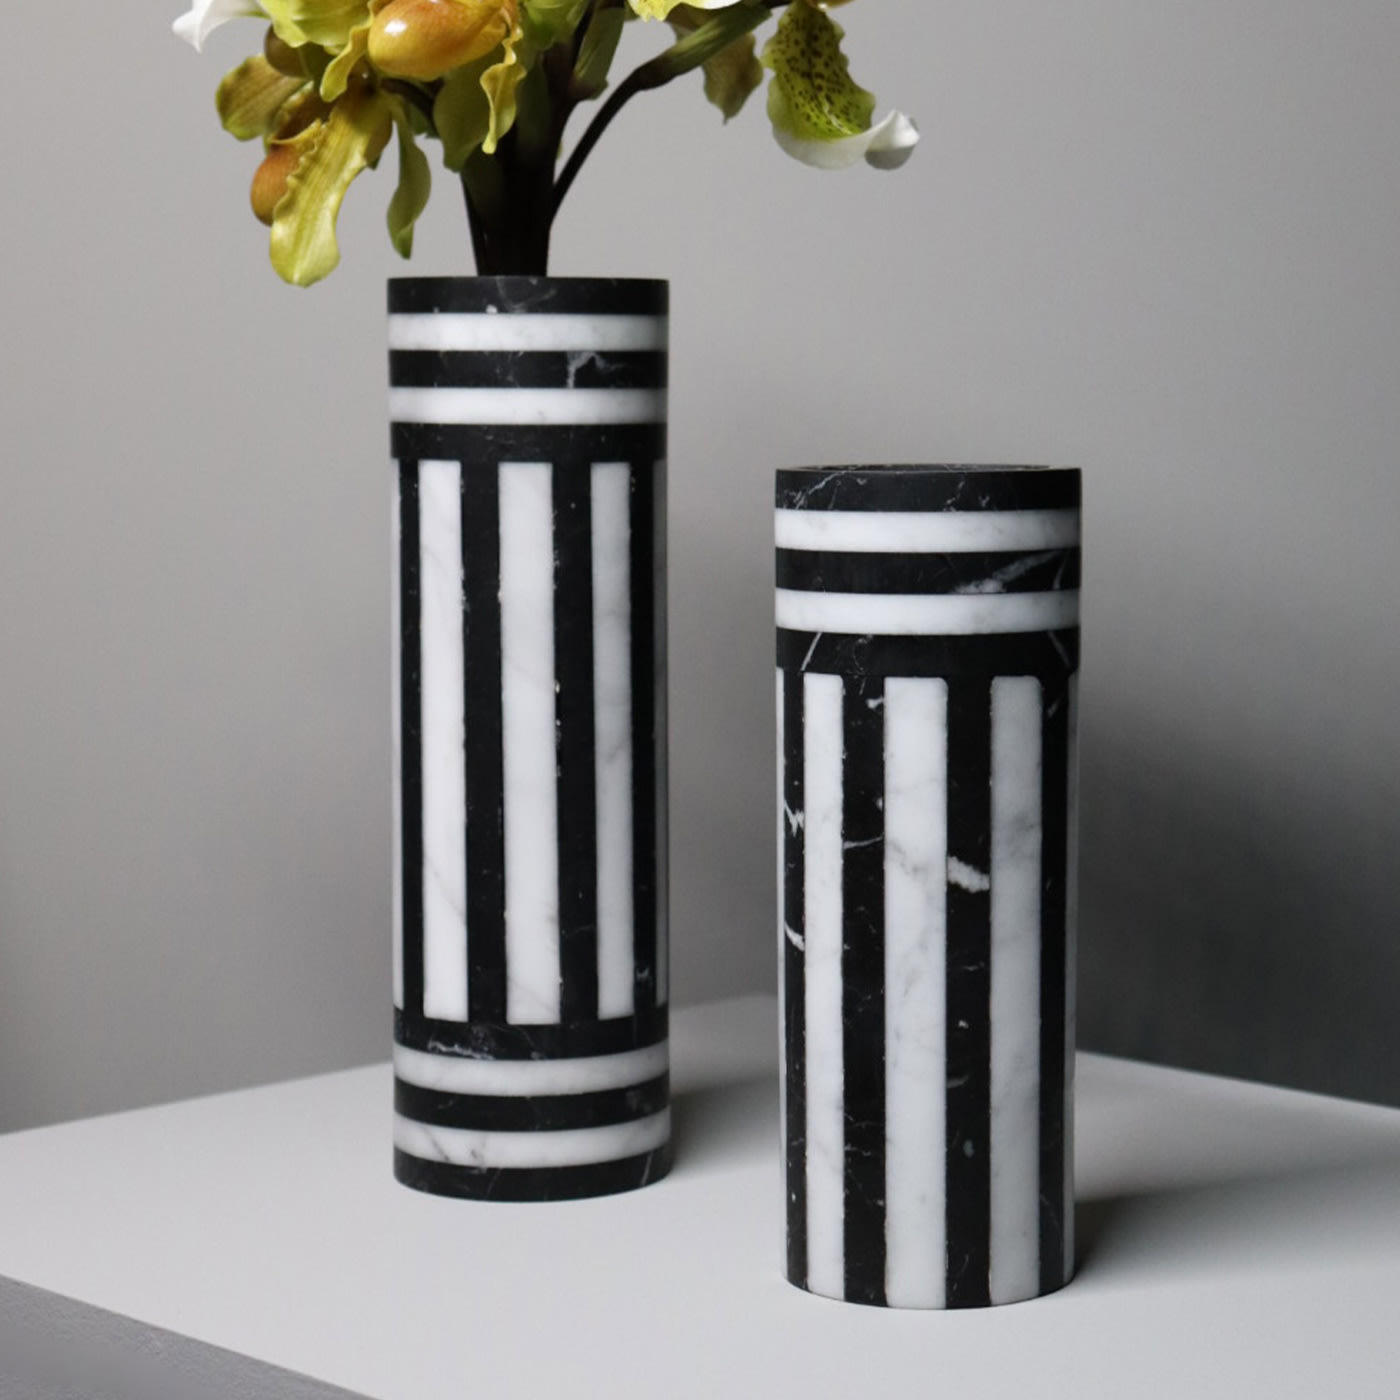 Bloom small vase - Editions Milano